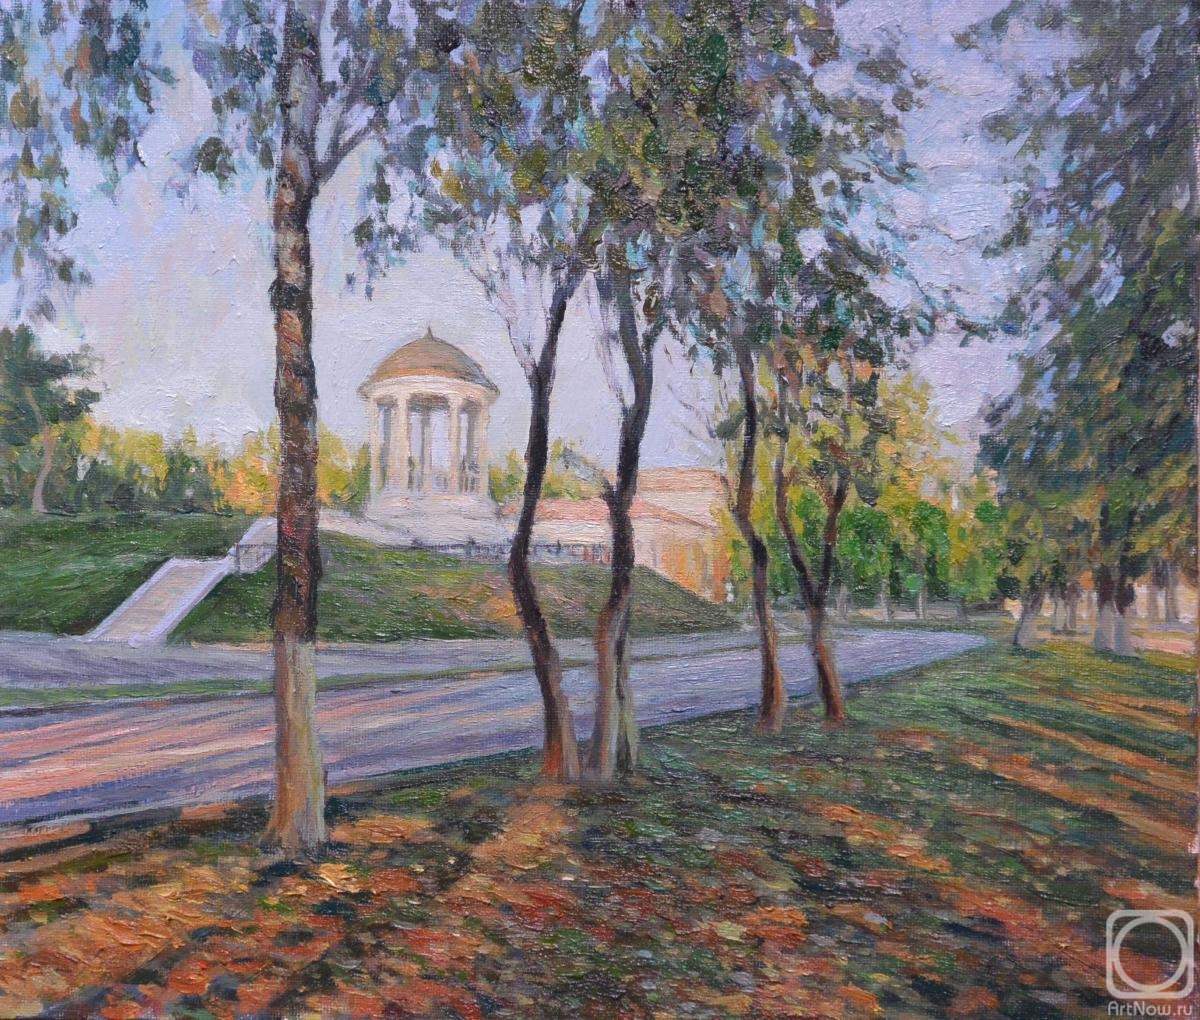 Antonova Galina. Pavilion Of Ostrovsky